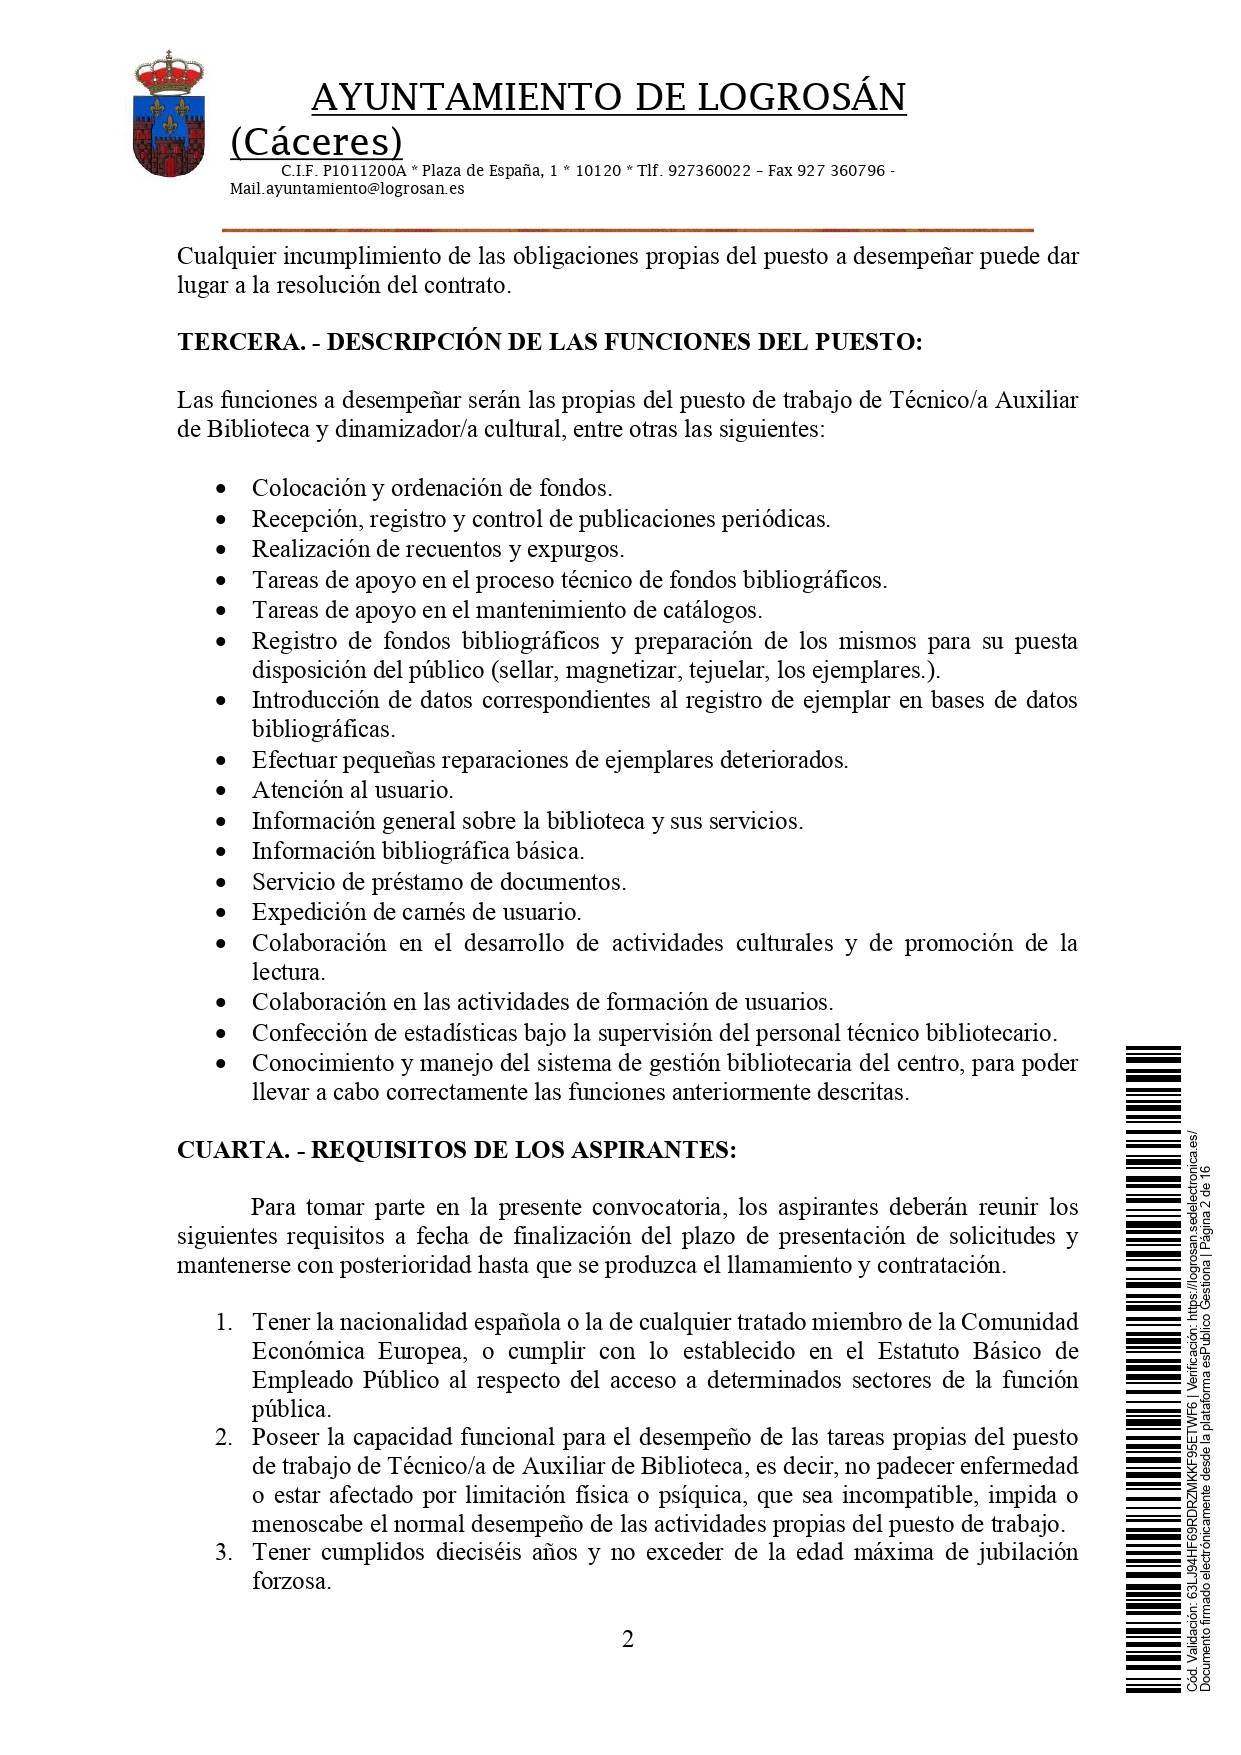 Técnicos-as auxiliar de biblioteca y dinamizador-a cultural (2021) - Logrosán (Cáceres) 2